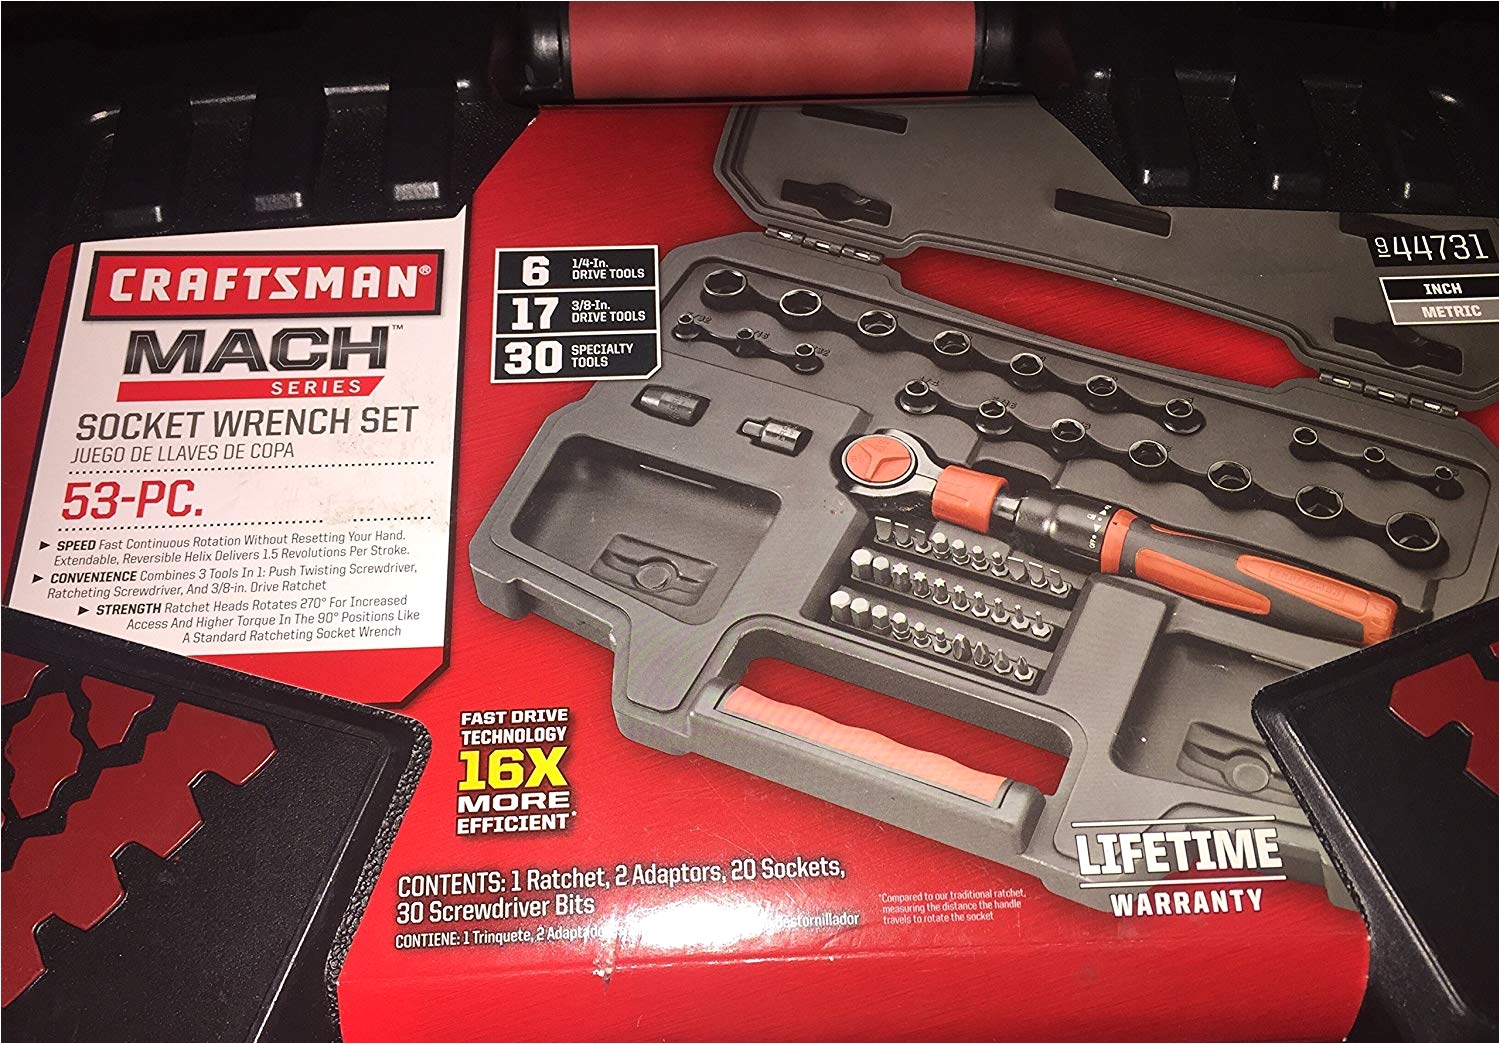 Craftsman 2 Pc. socket Rack Craftsman Mach Series 53 Pc socket Wrench Set Amazon Com